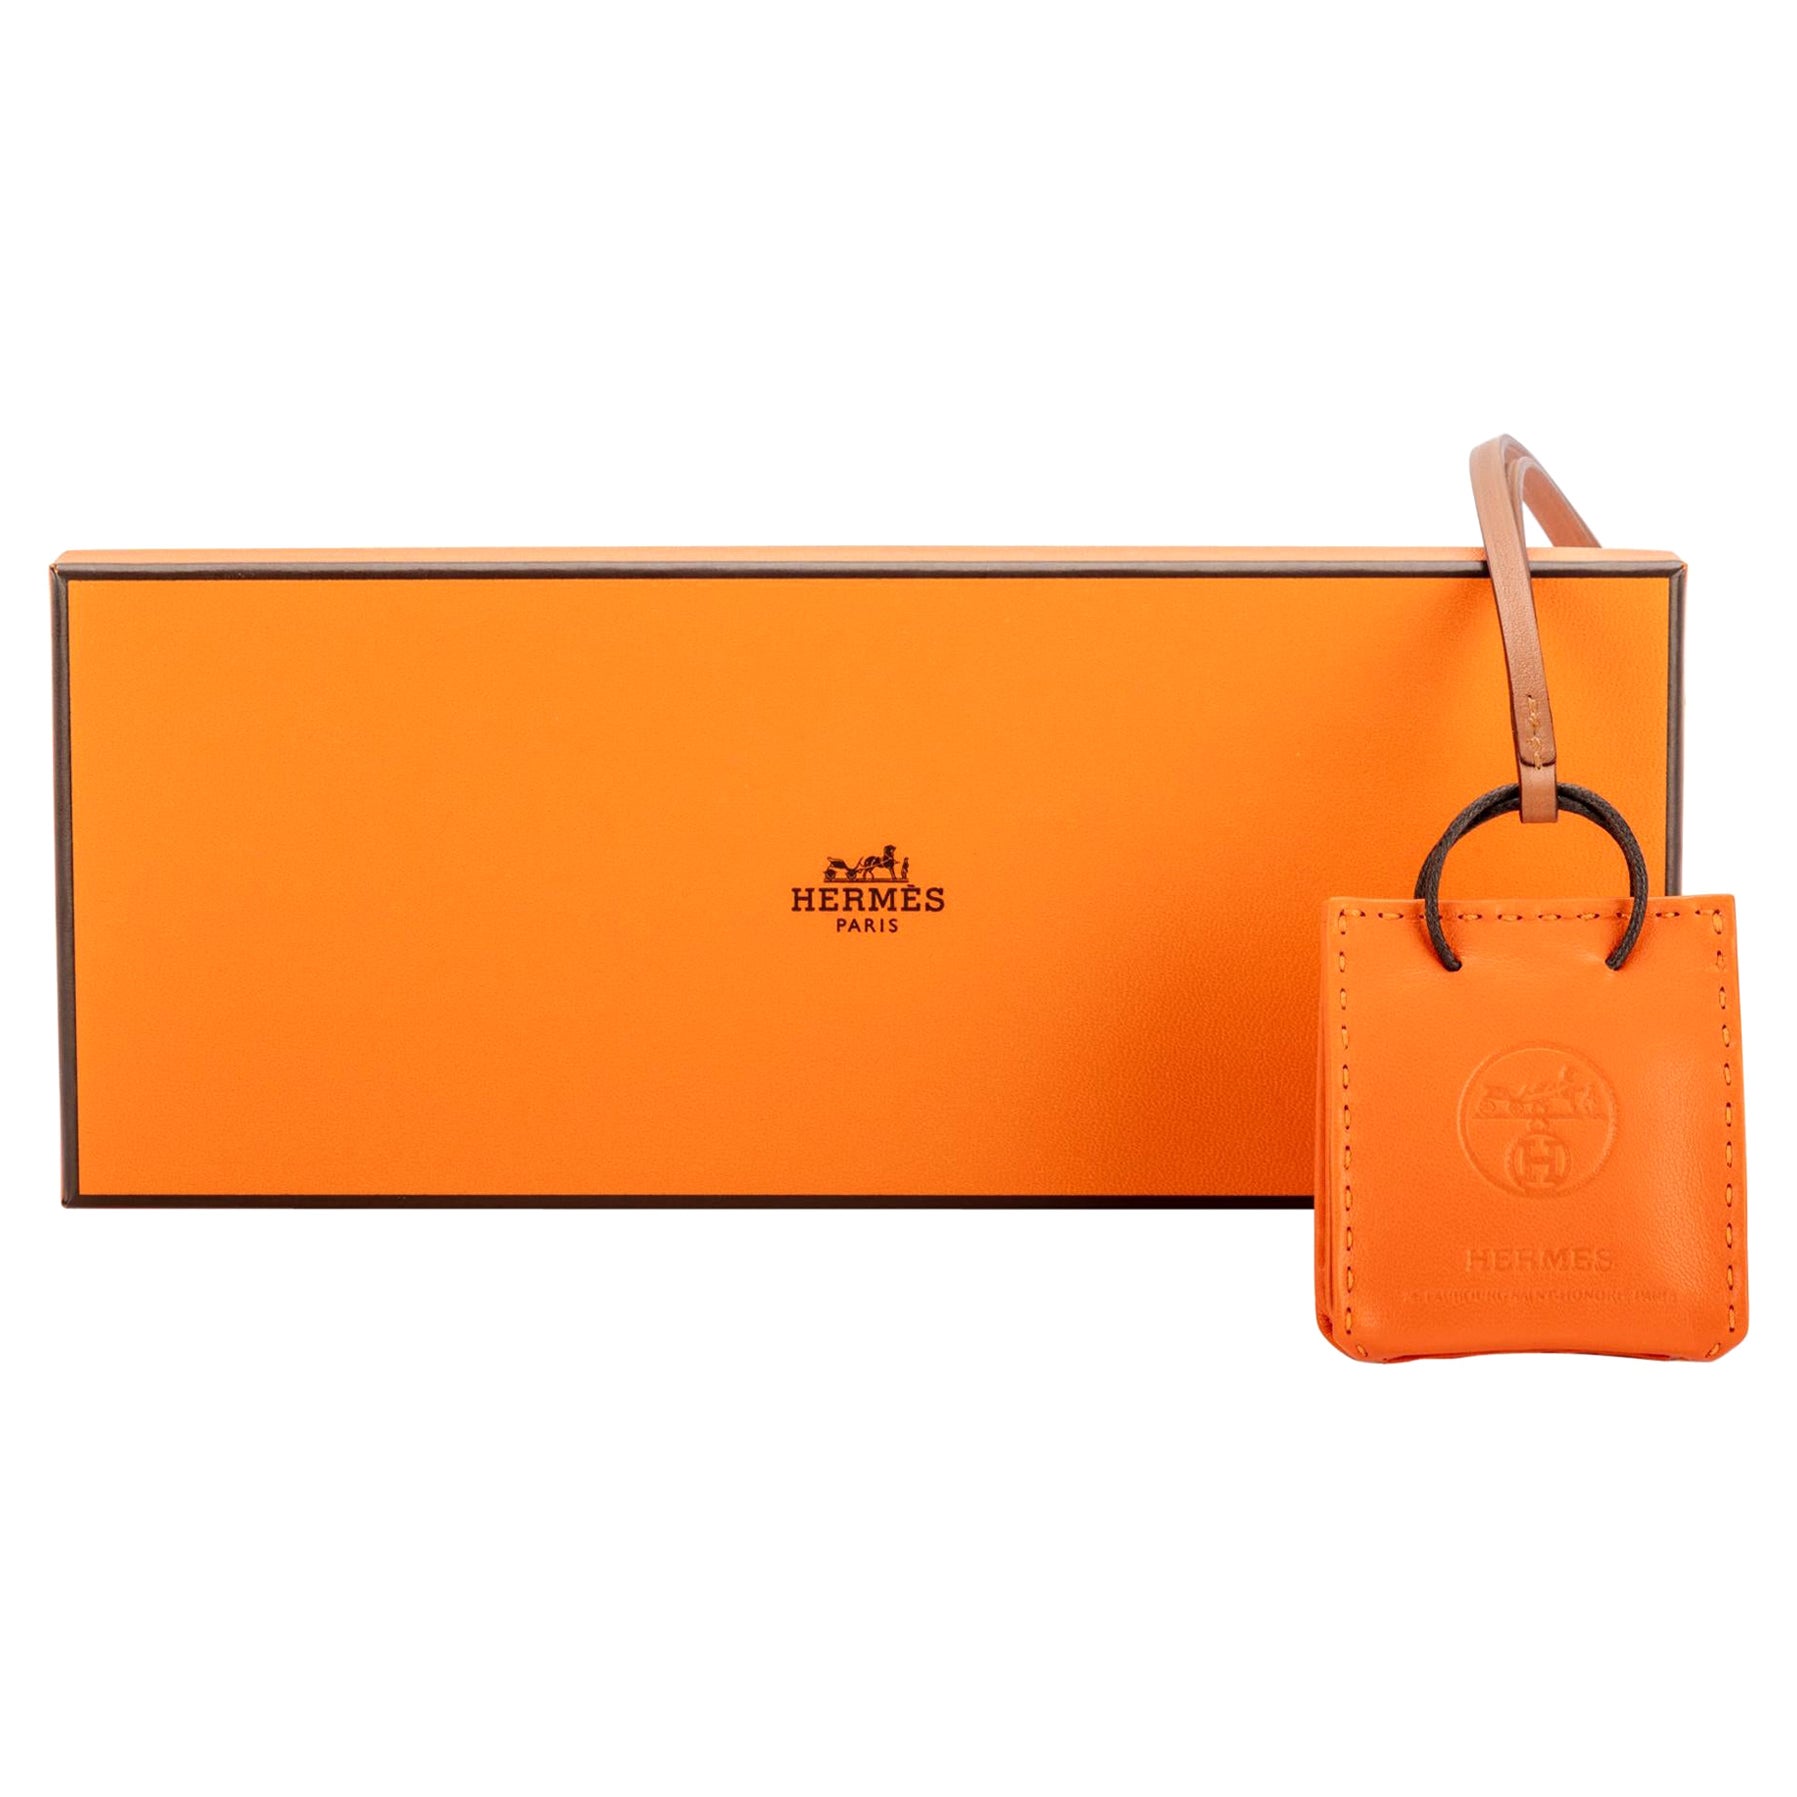 New in Box Hermes Rare Orange Bag Charm For Sale